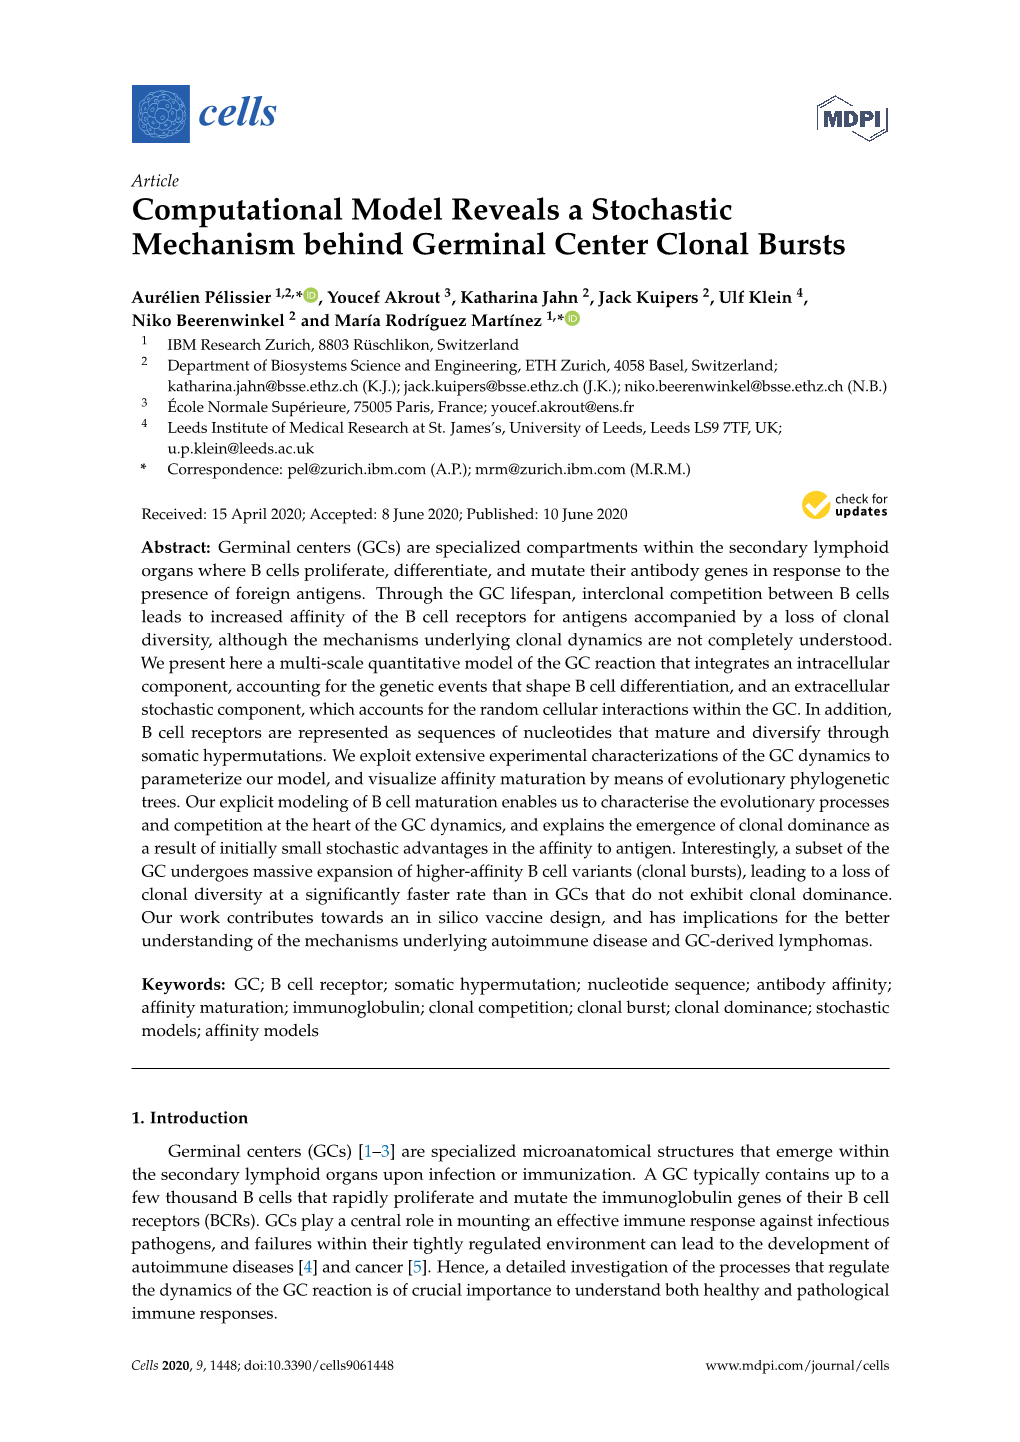 Computational Model Reveals a Stochastic Mechanism Behind Germinal Center Clonal Bursts